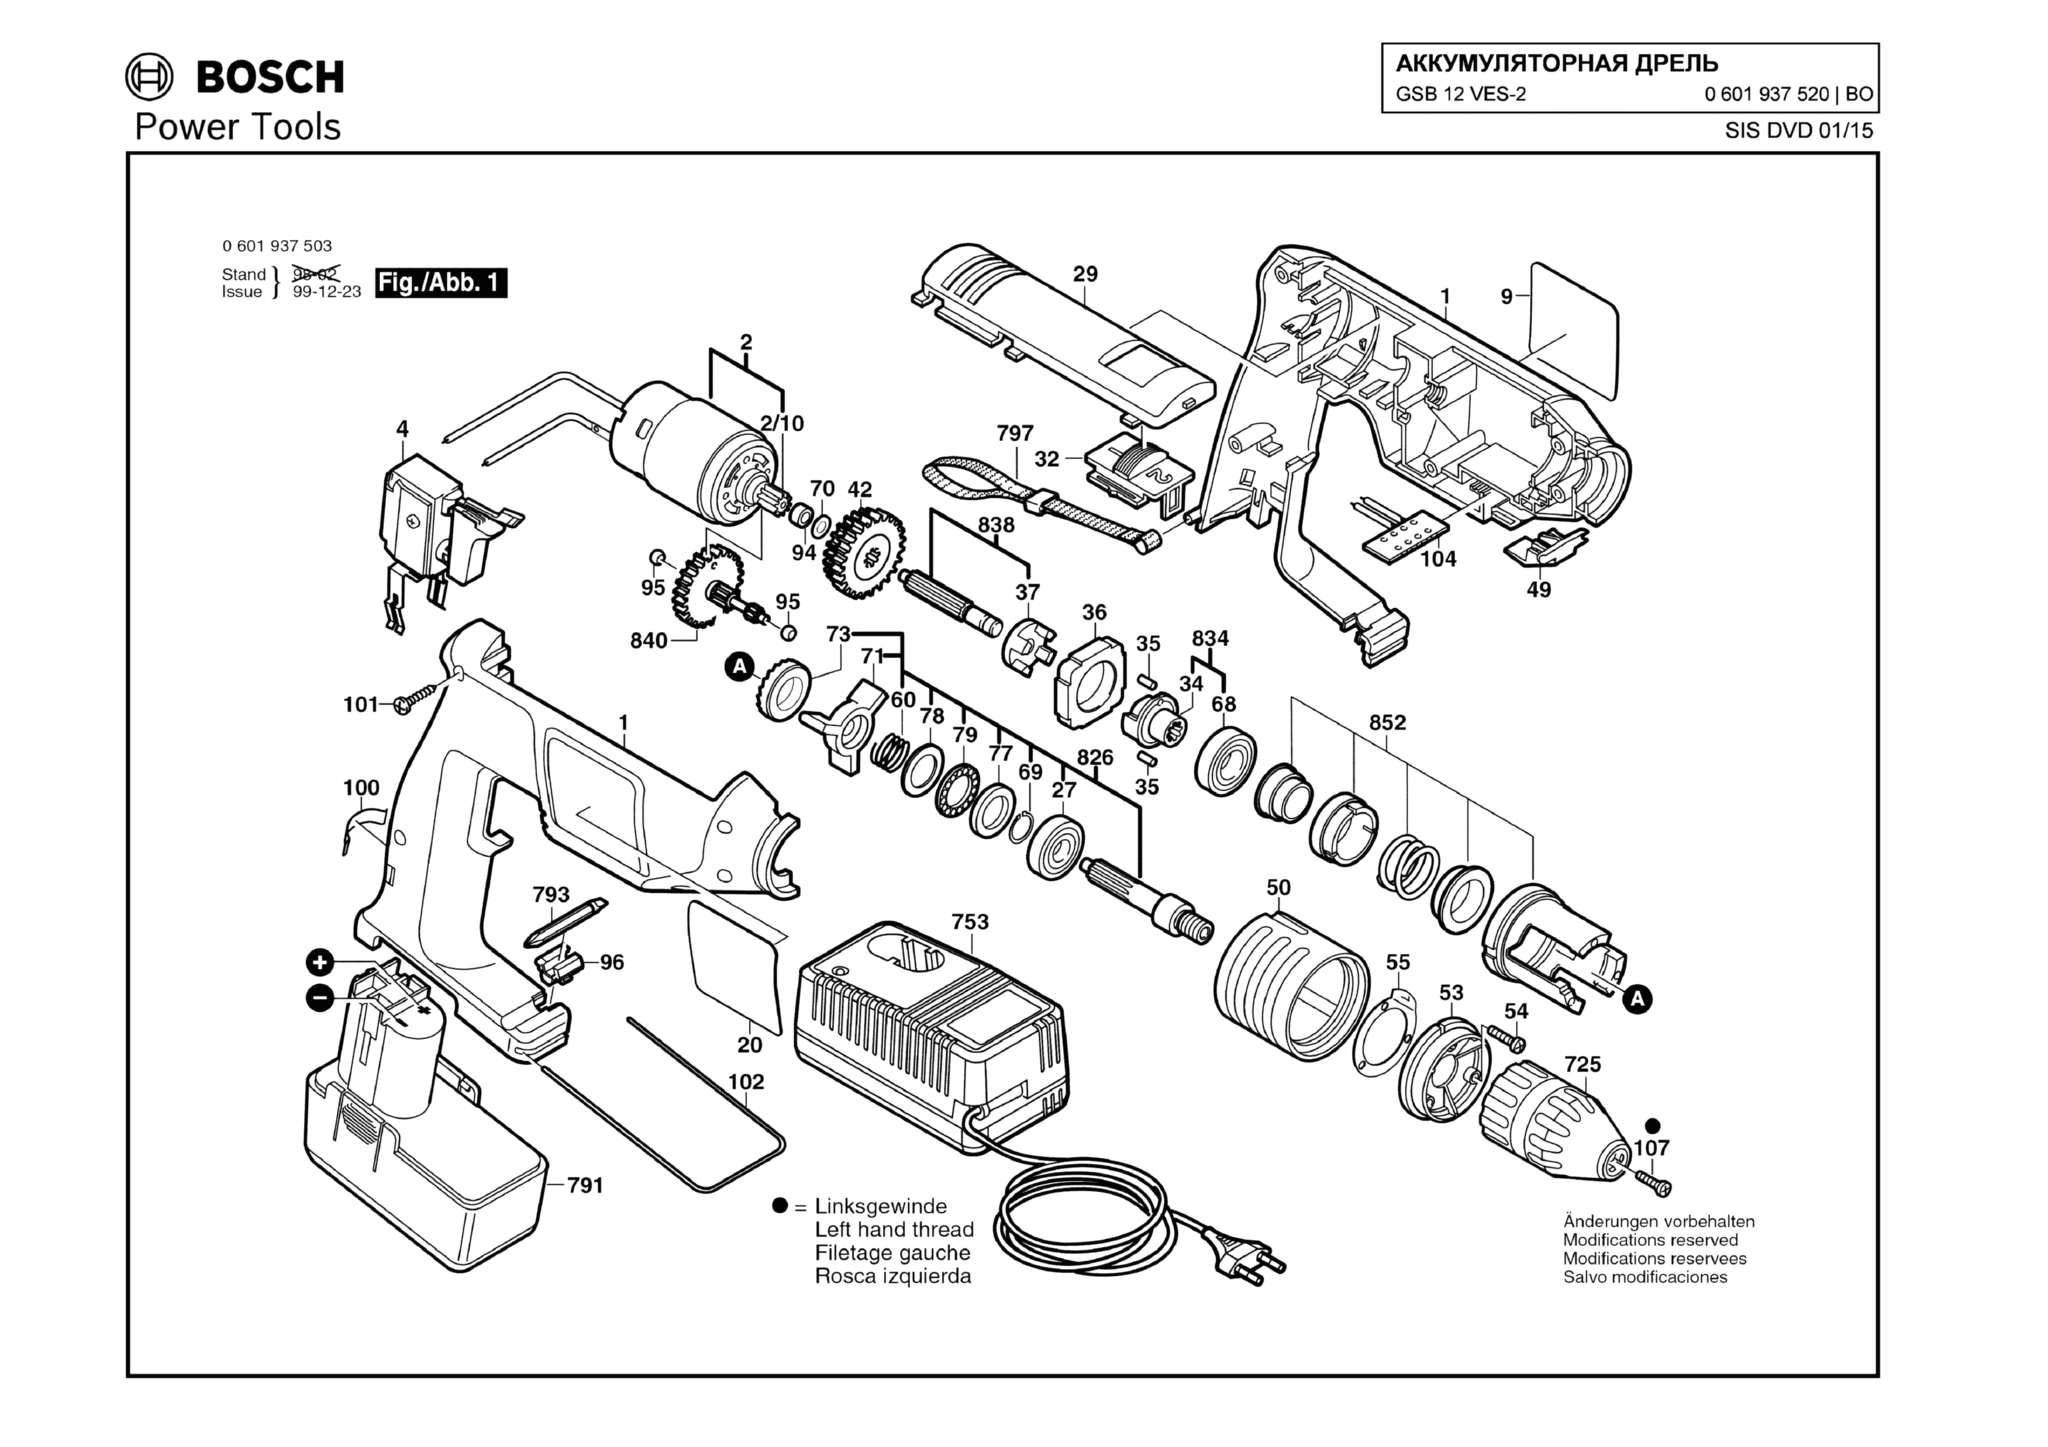 Запчасти, схема и деталировка Bosch GSB 12 VES-2 (ТИП 0601937520)